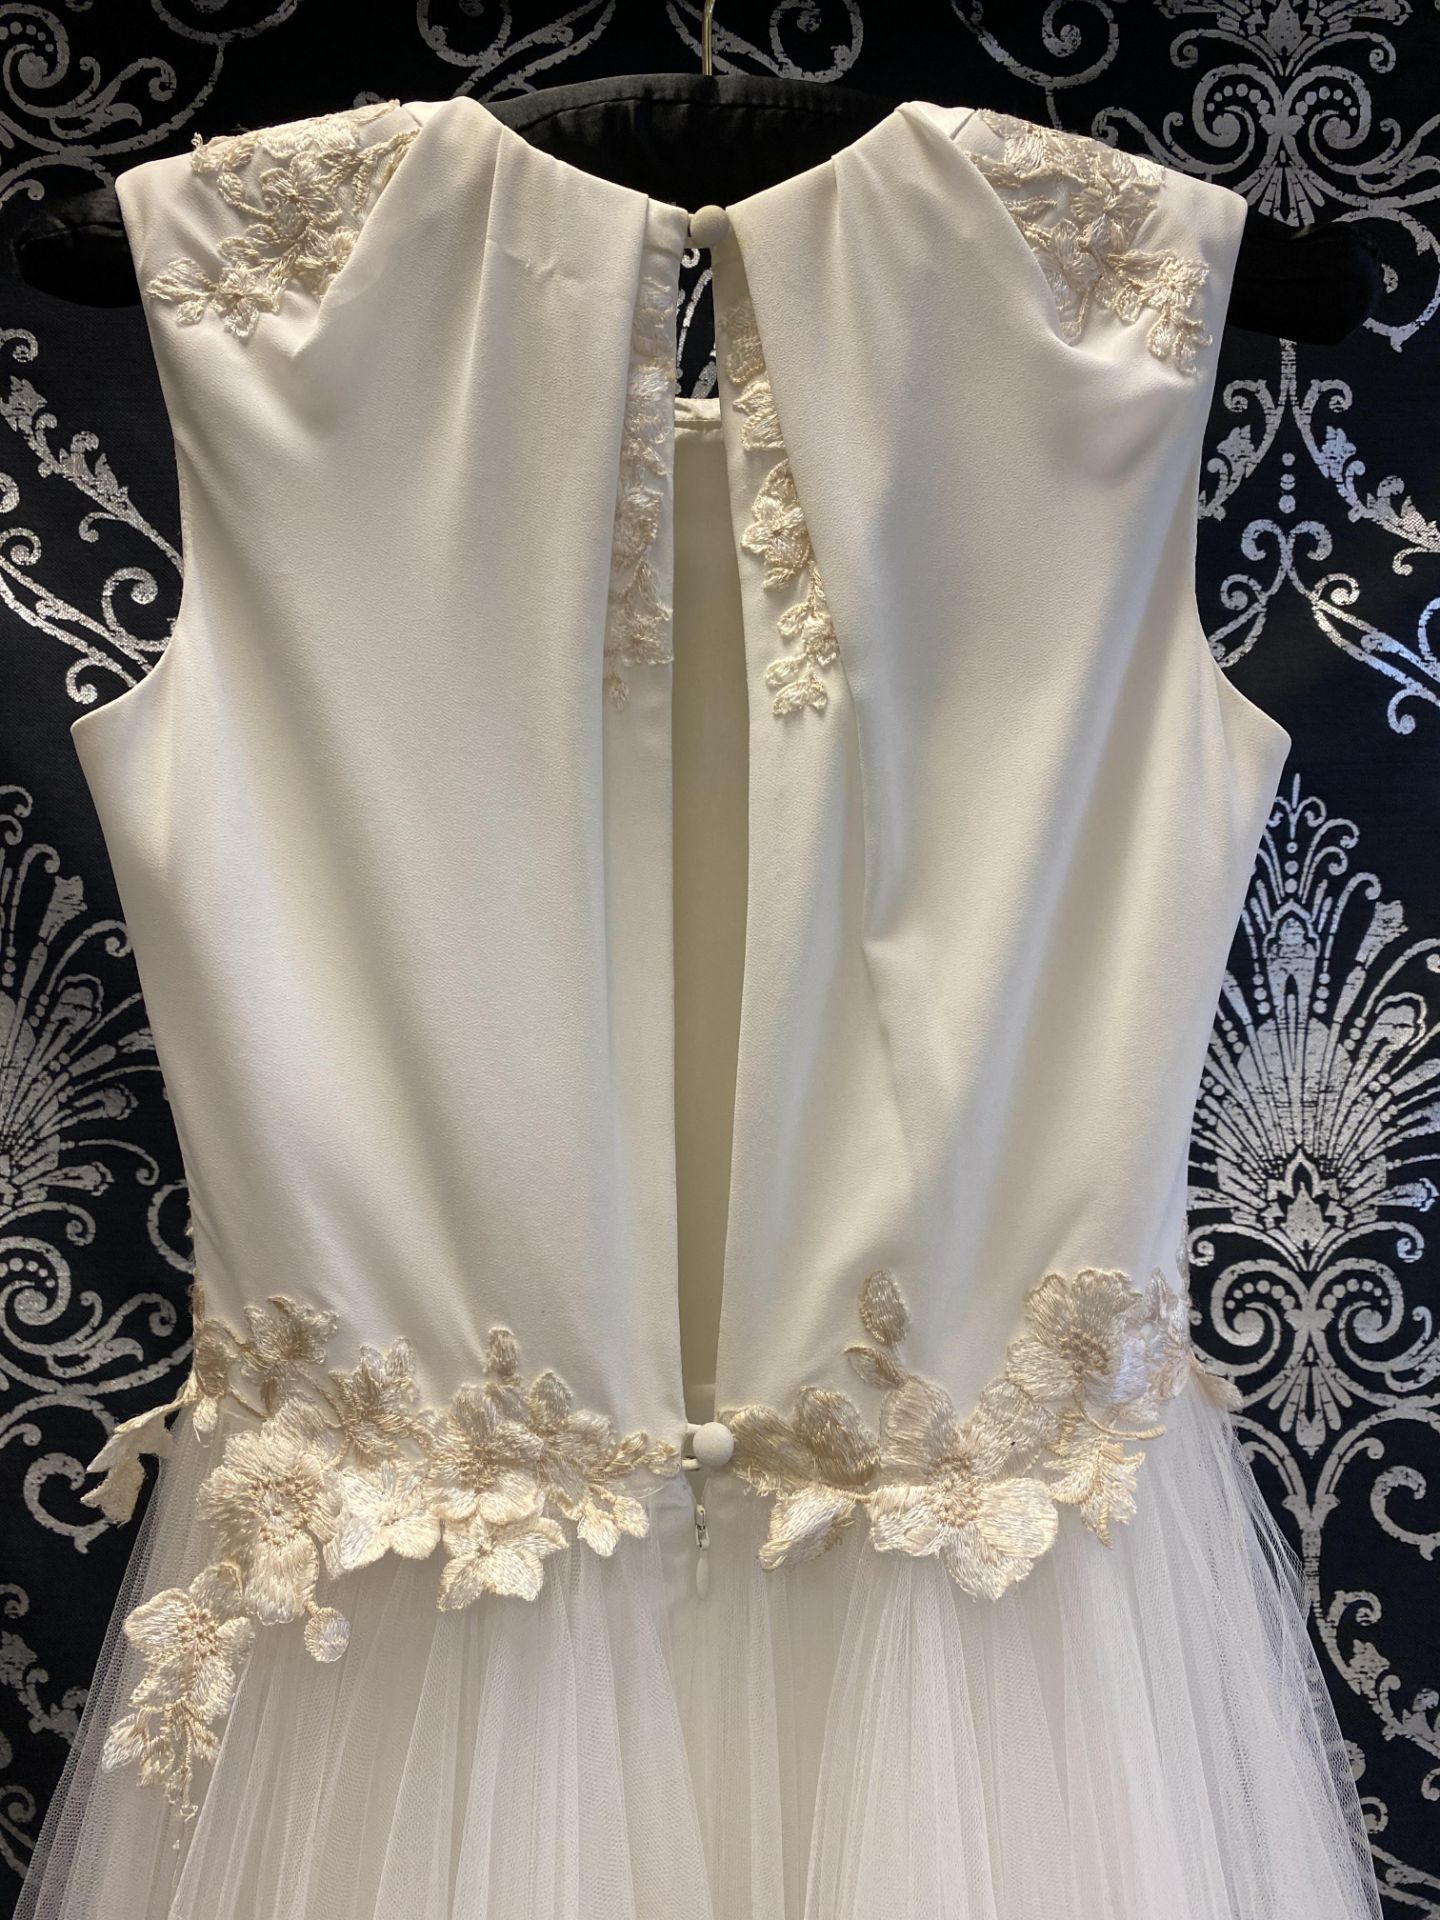 1 x DAVID FIELDEN '8816' Jewel Neck Full Skirted Designer Wedding Dress RRP £2,850 UK 12 - Image 7 of 9